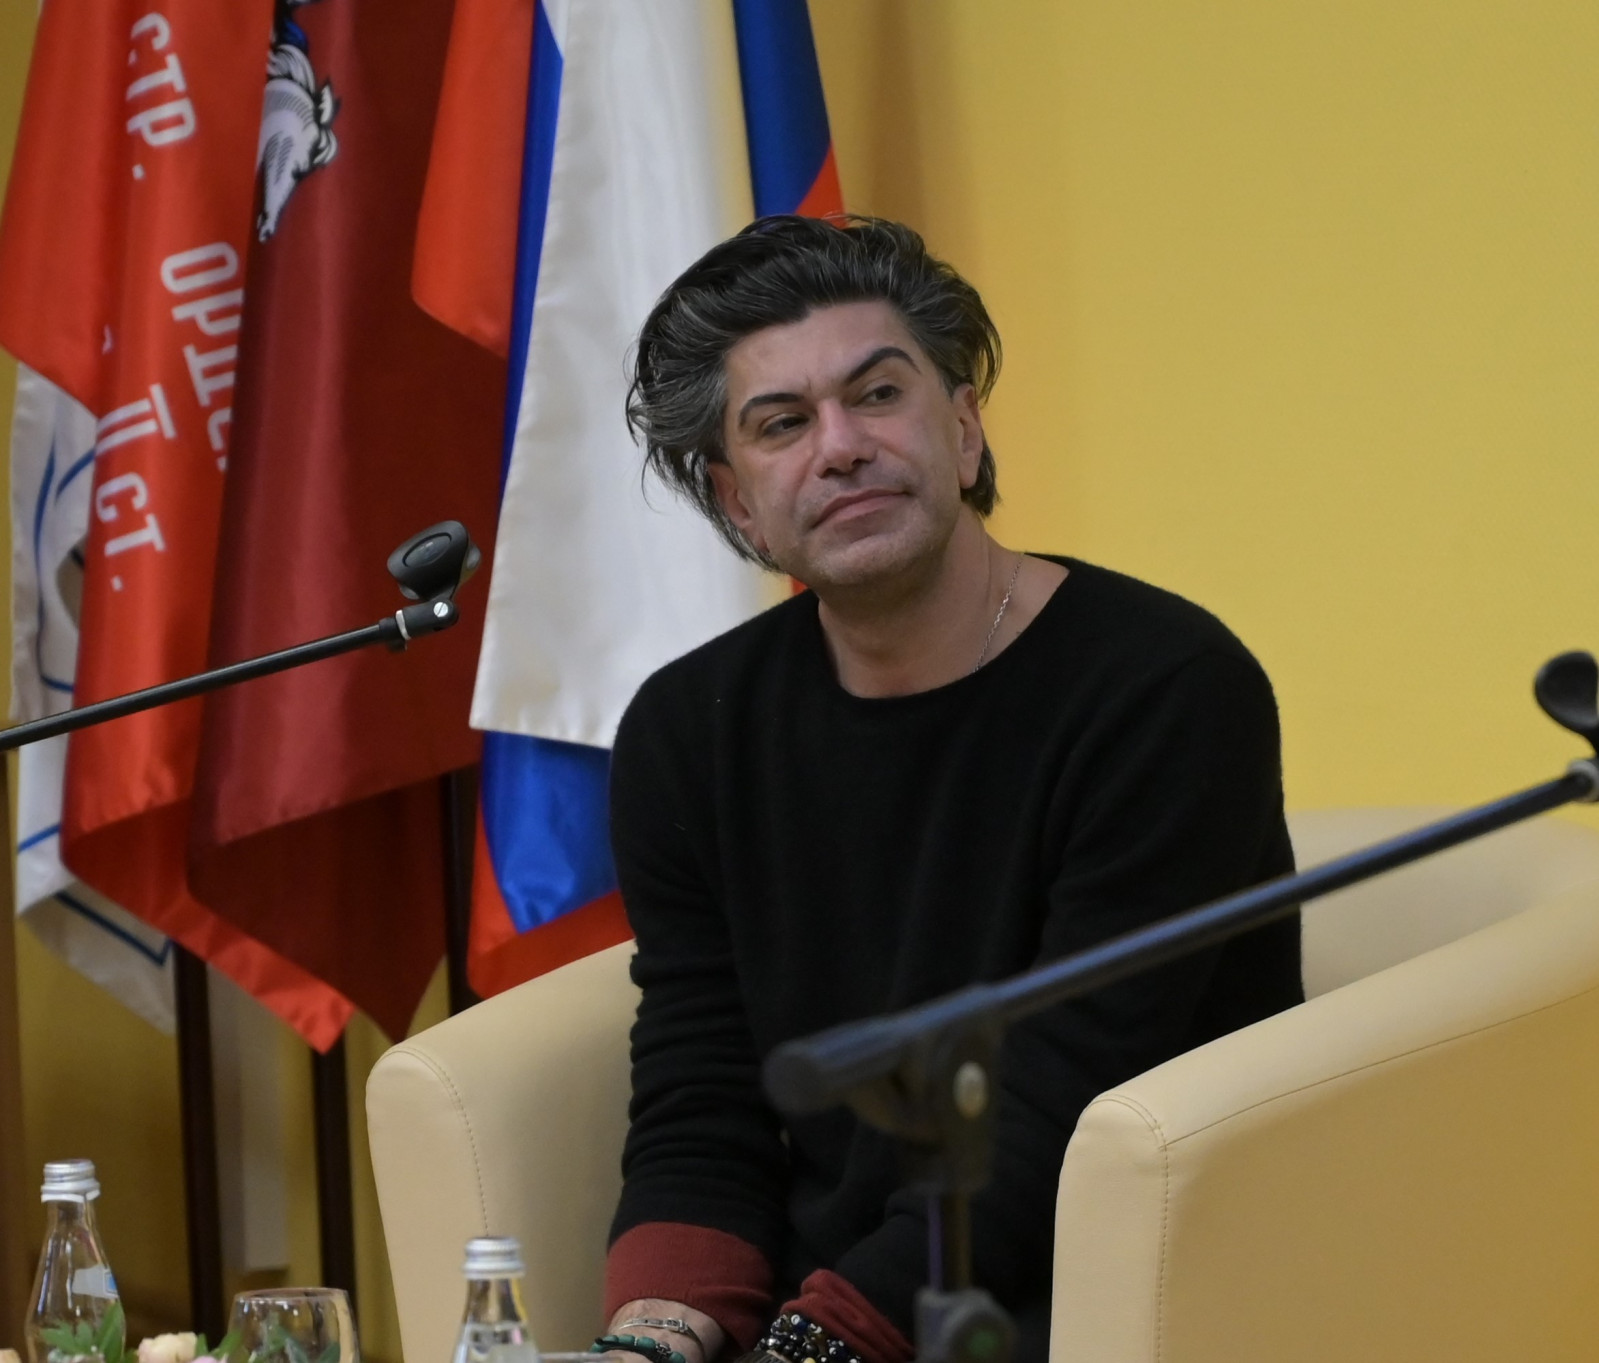 Николай Цискаридзе (Nikolai Tsiskaridze)